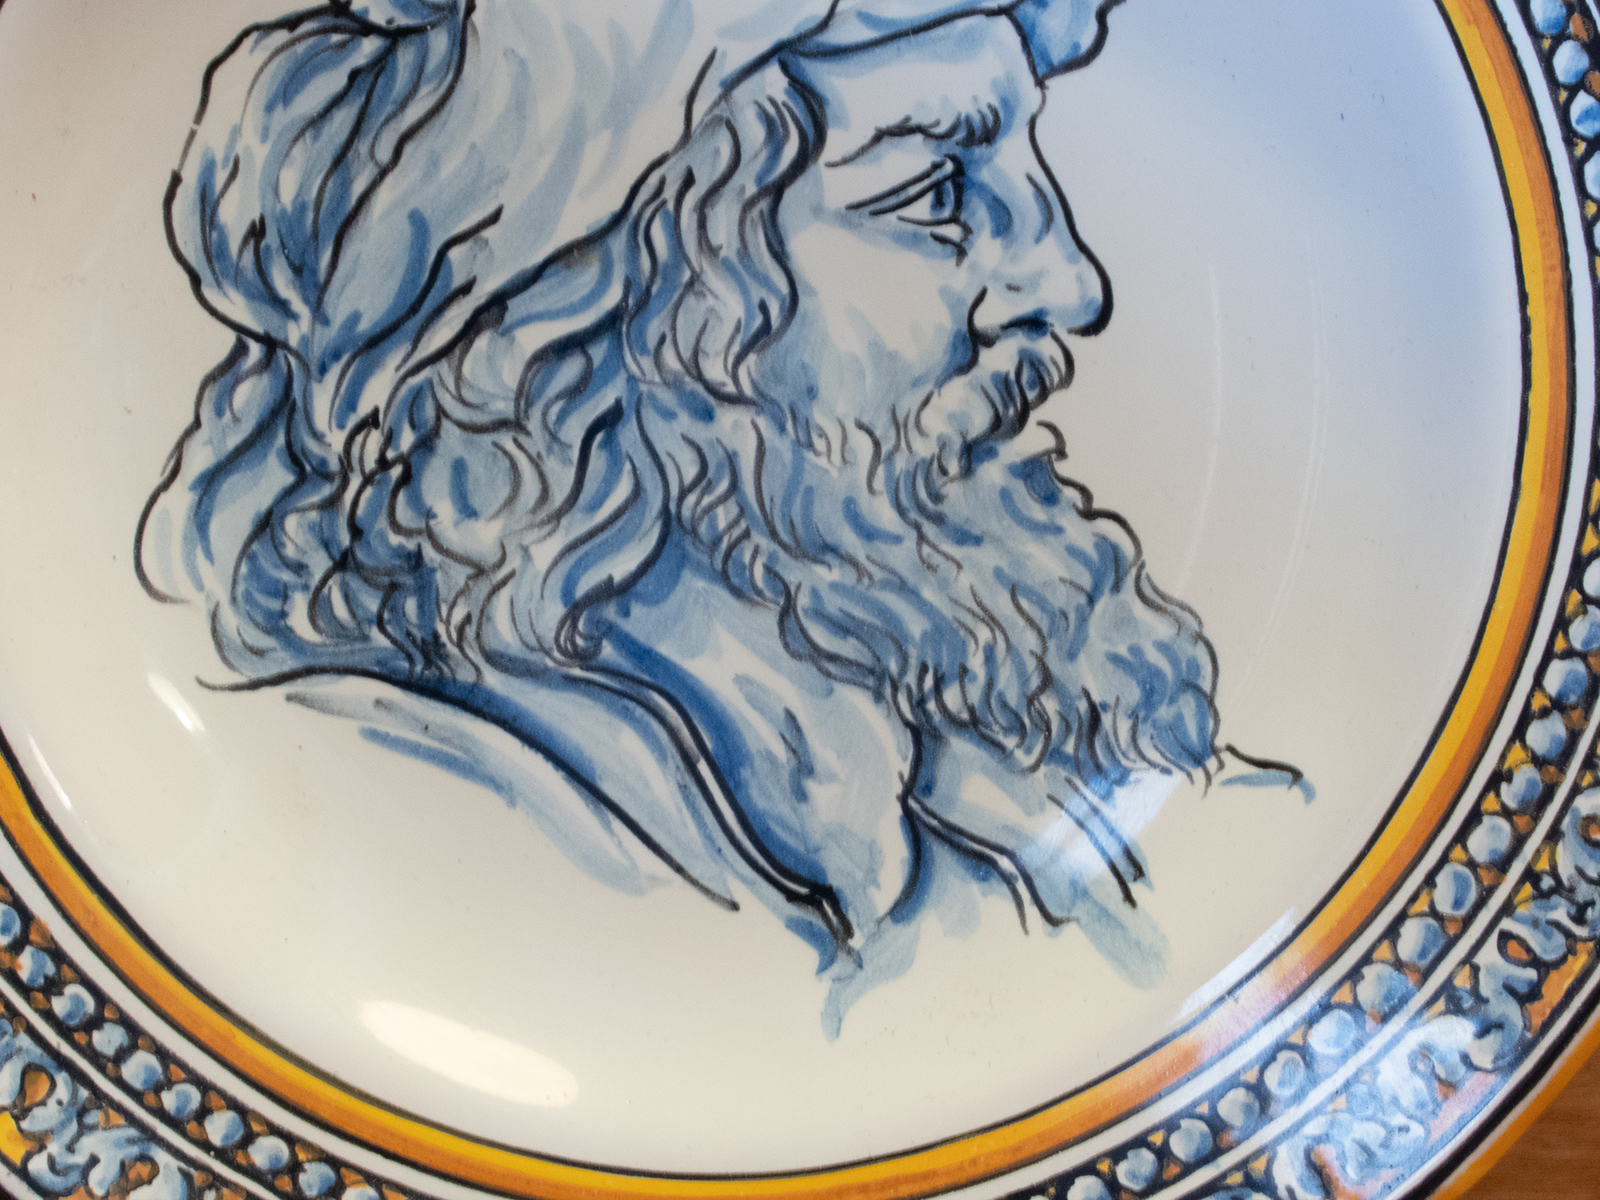 plato retrato alfarero Totom cerámica traciional